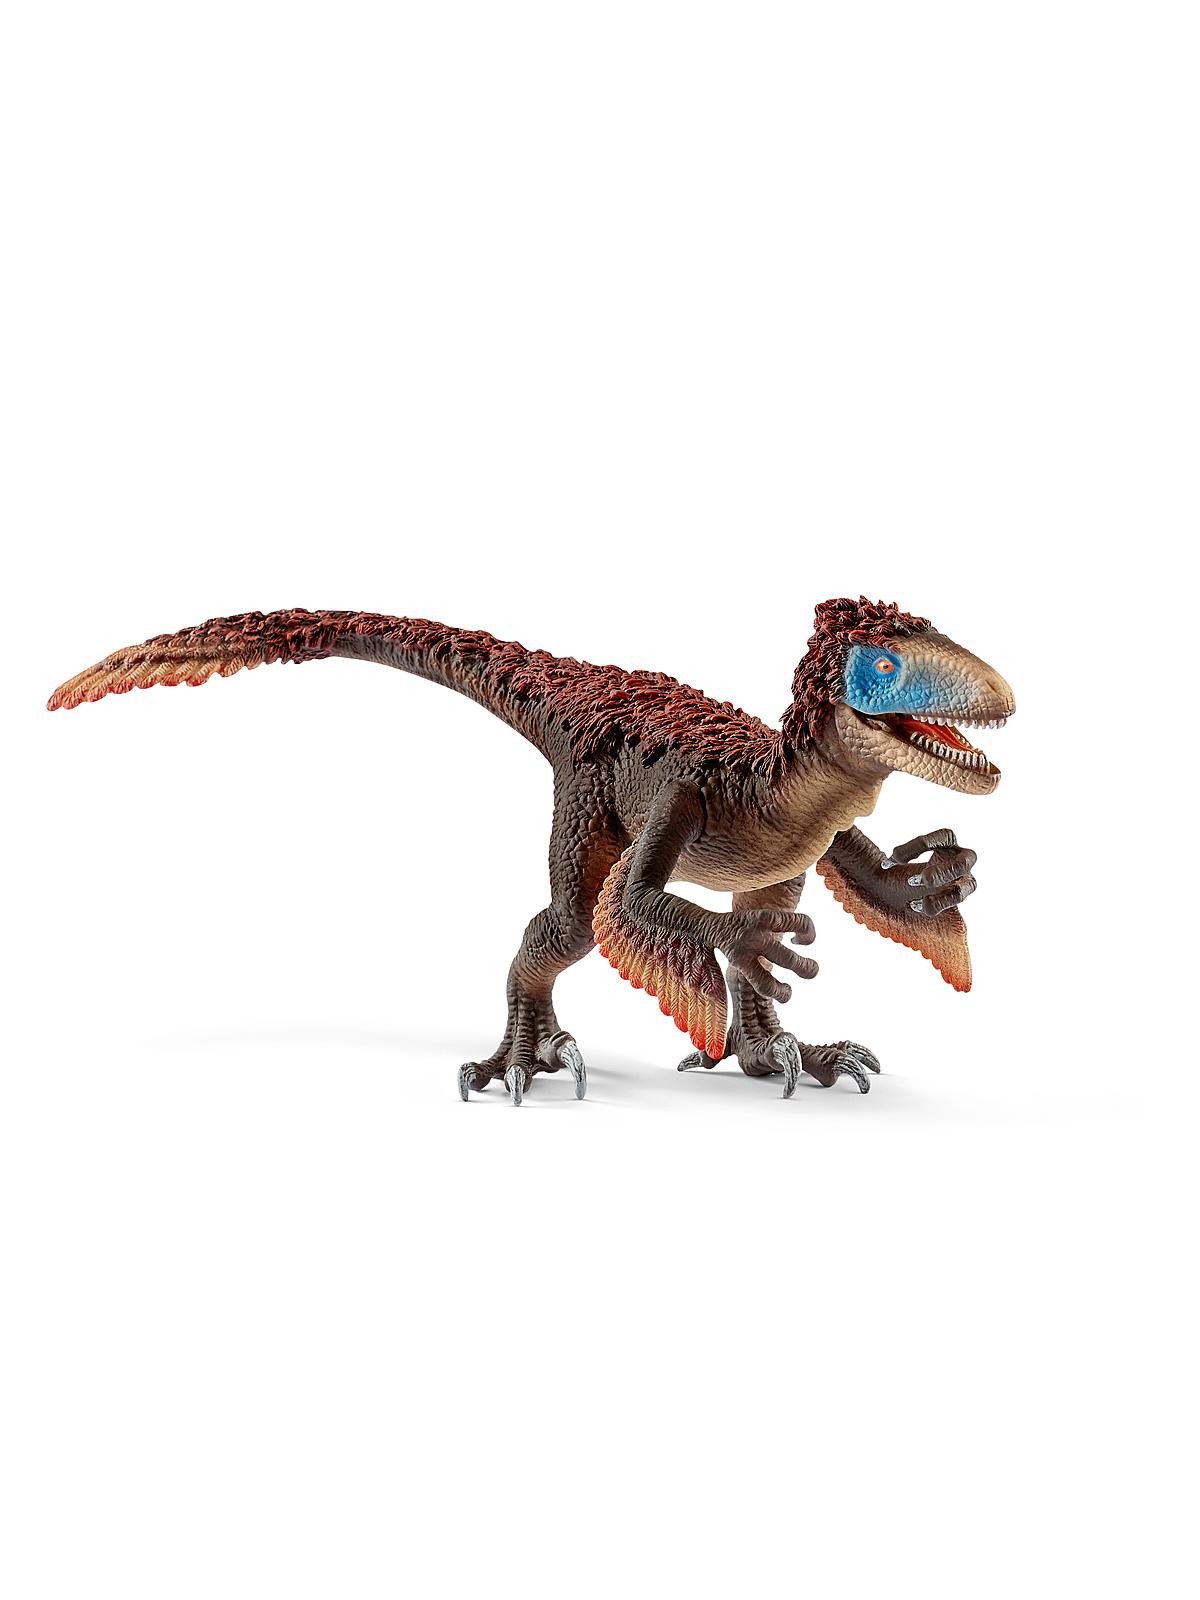 Dinosaurs Utahraptor